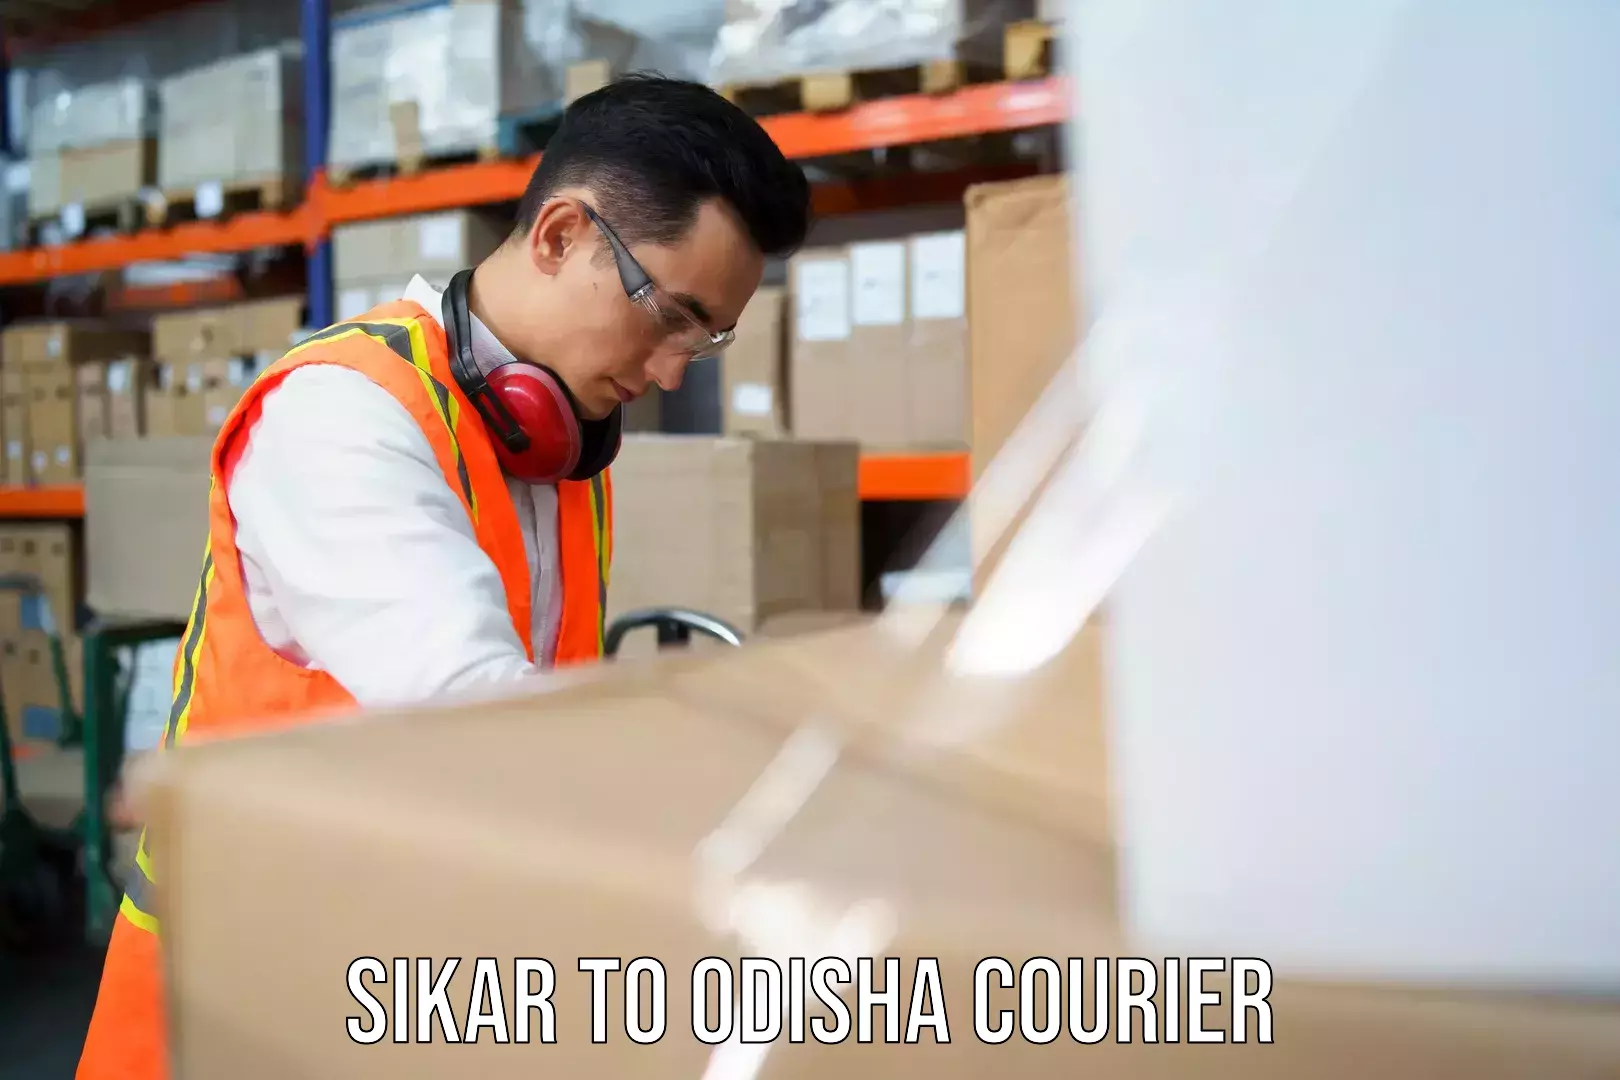 Courier service partnerships Sikar to Pallahara